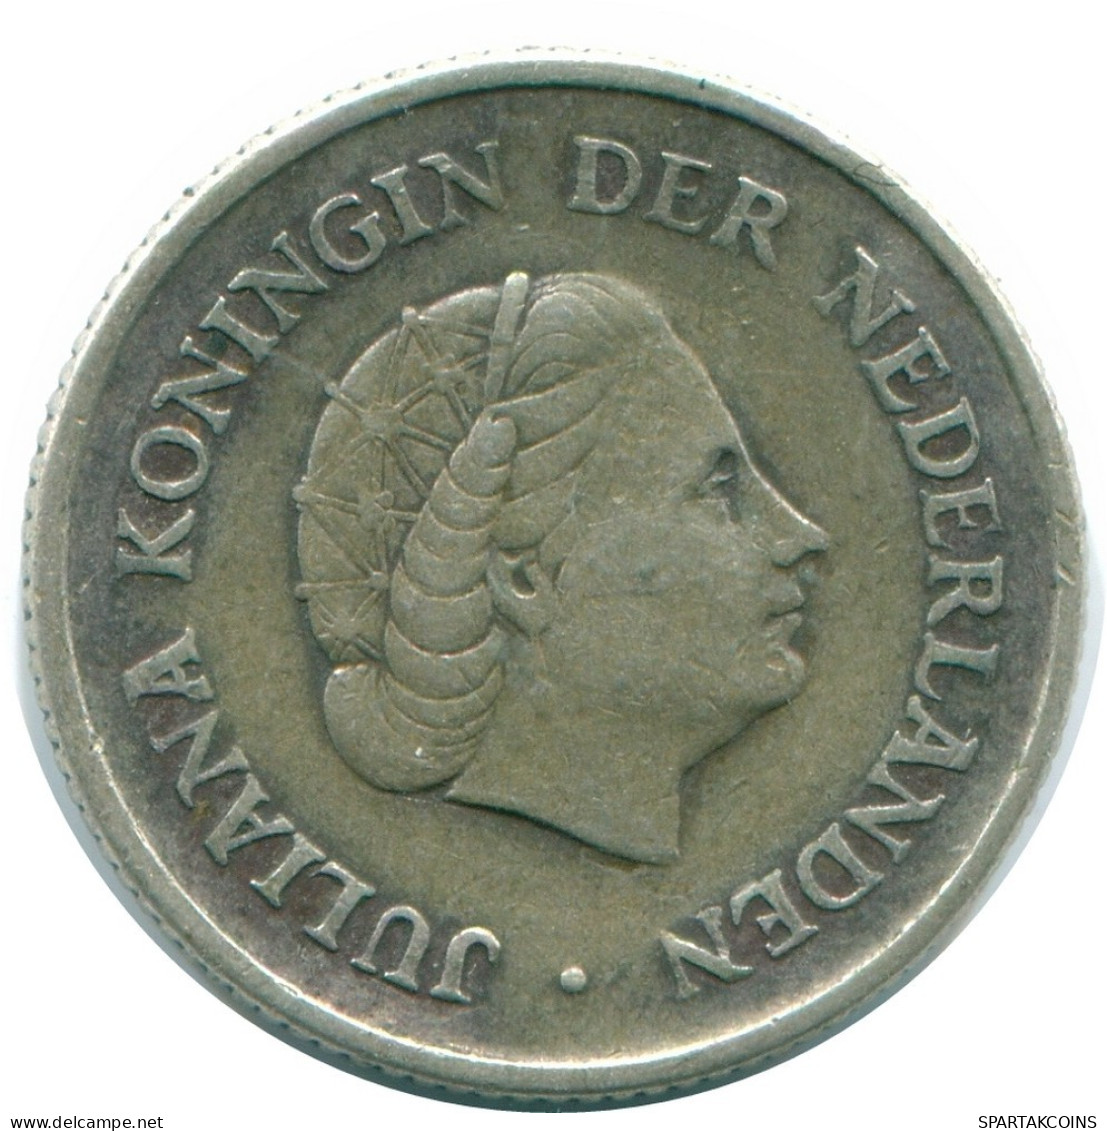 1/4 GULDEN 1965 NETHERLANDS ANTILLES SILVER Colonial Coin #NL11405.4.U.A - Niederländische Antillen